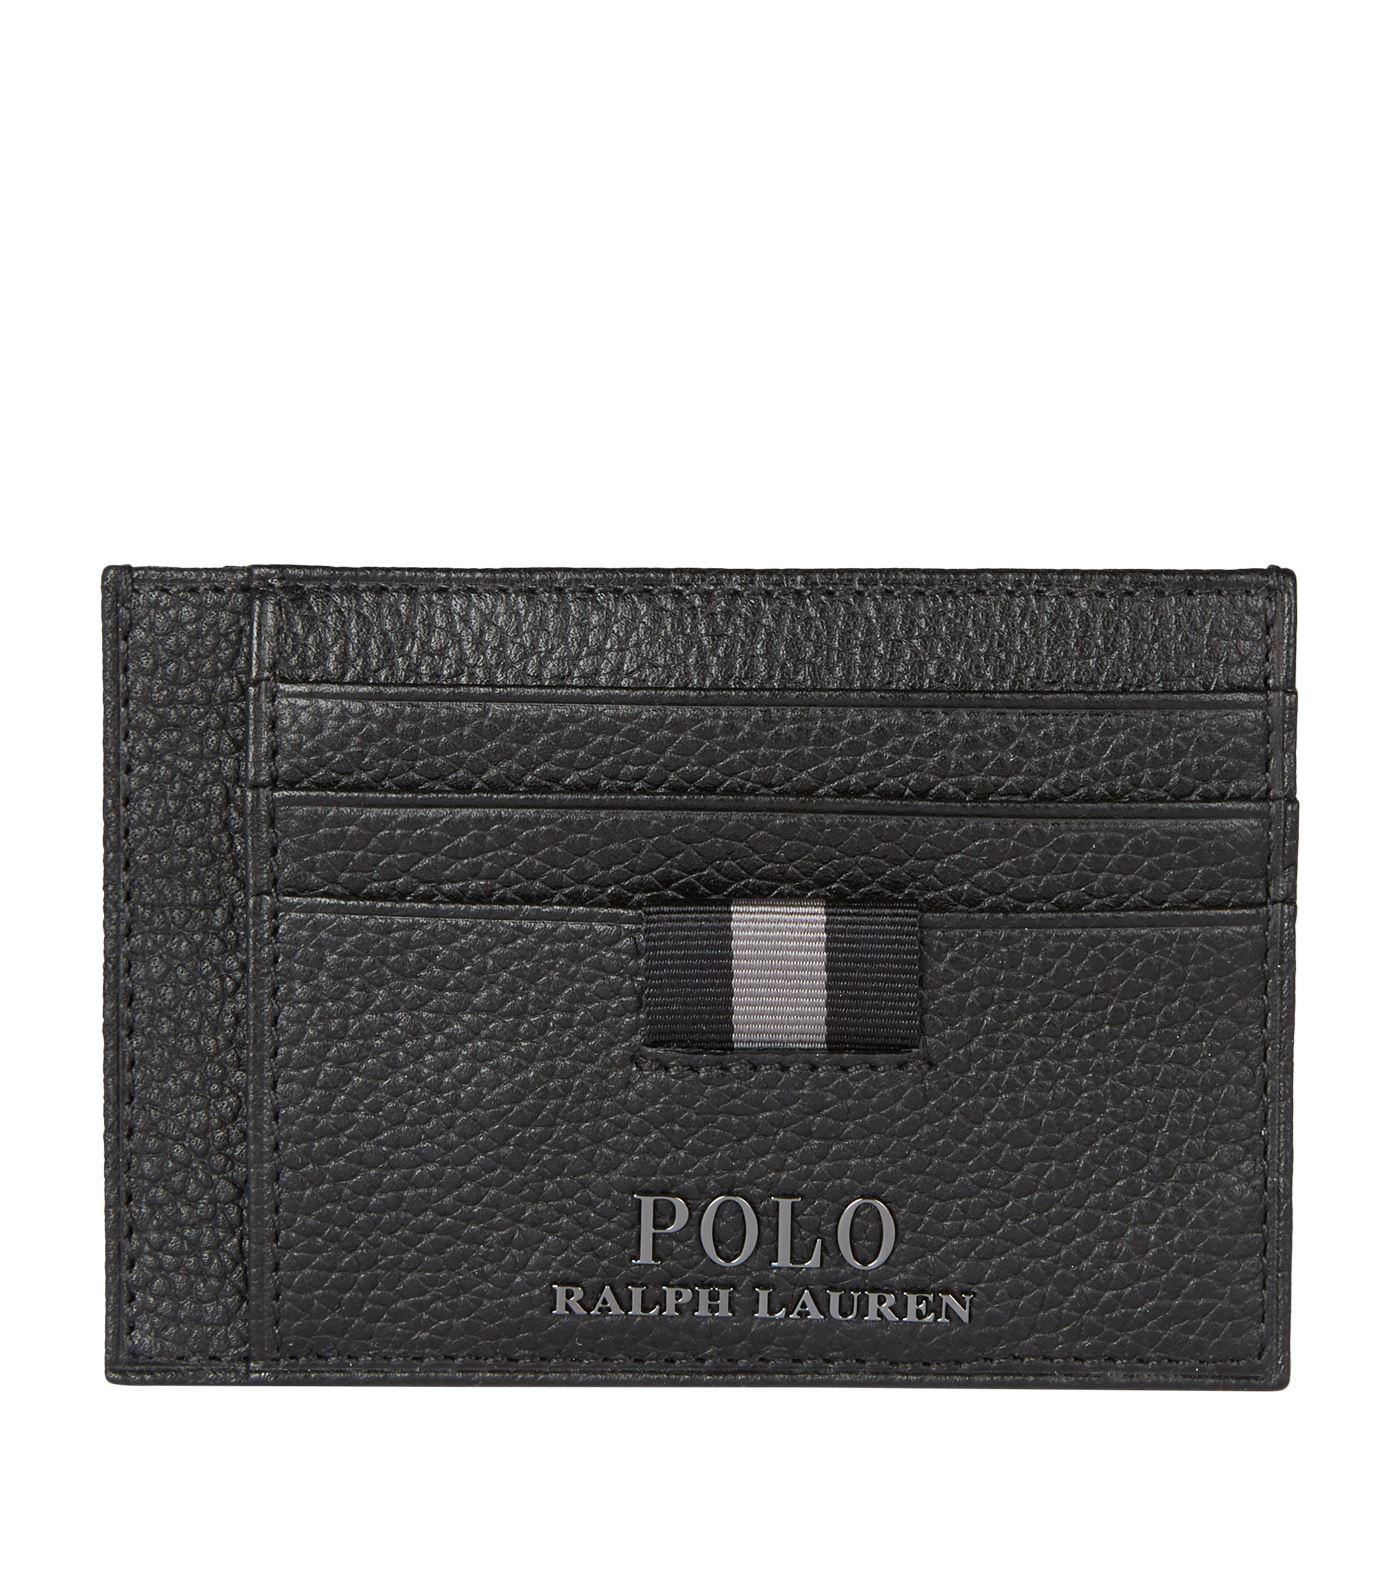 Polo Ralph Lauren Pebble Leather Money Clip in Black for Men - Lyst